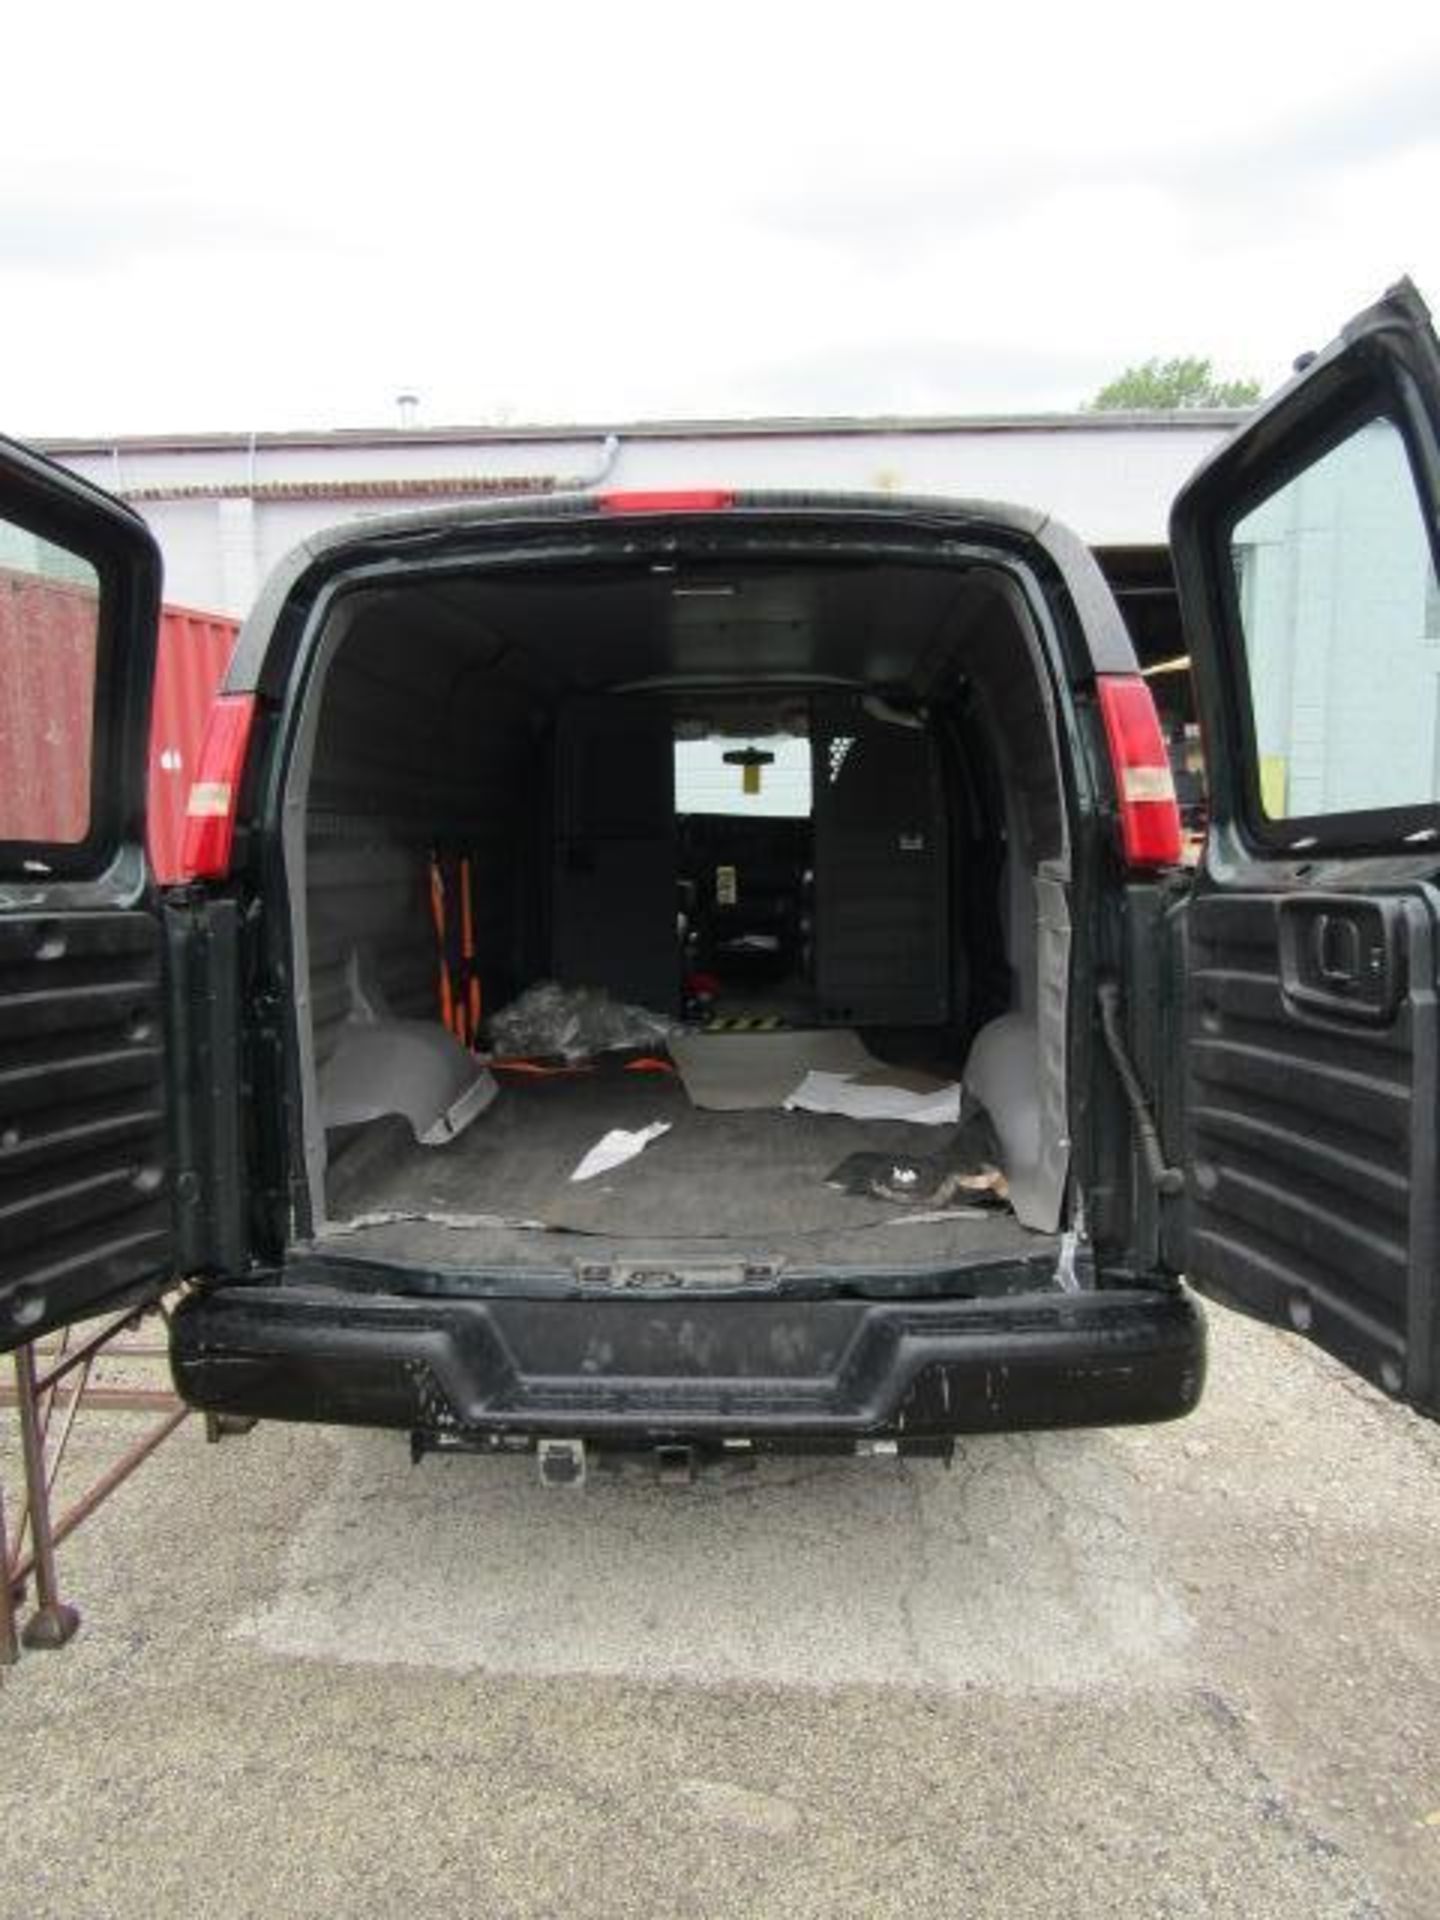 2014 Chevrolet Express Van Model G13405, VIN 1GCSGAFX1E1134256, Rubber Mats, Front Seat Partition to - Image 5 of 14